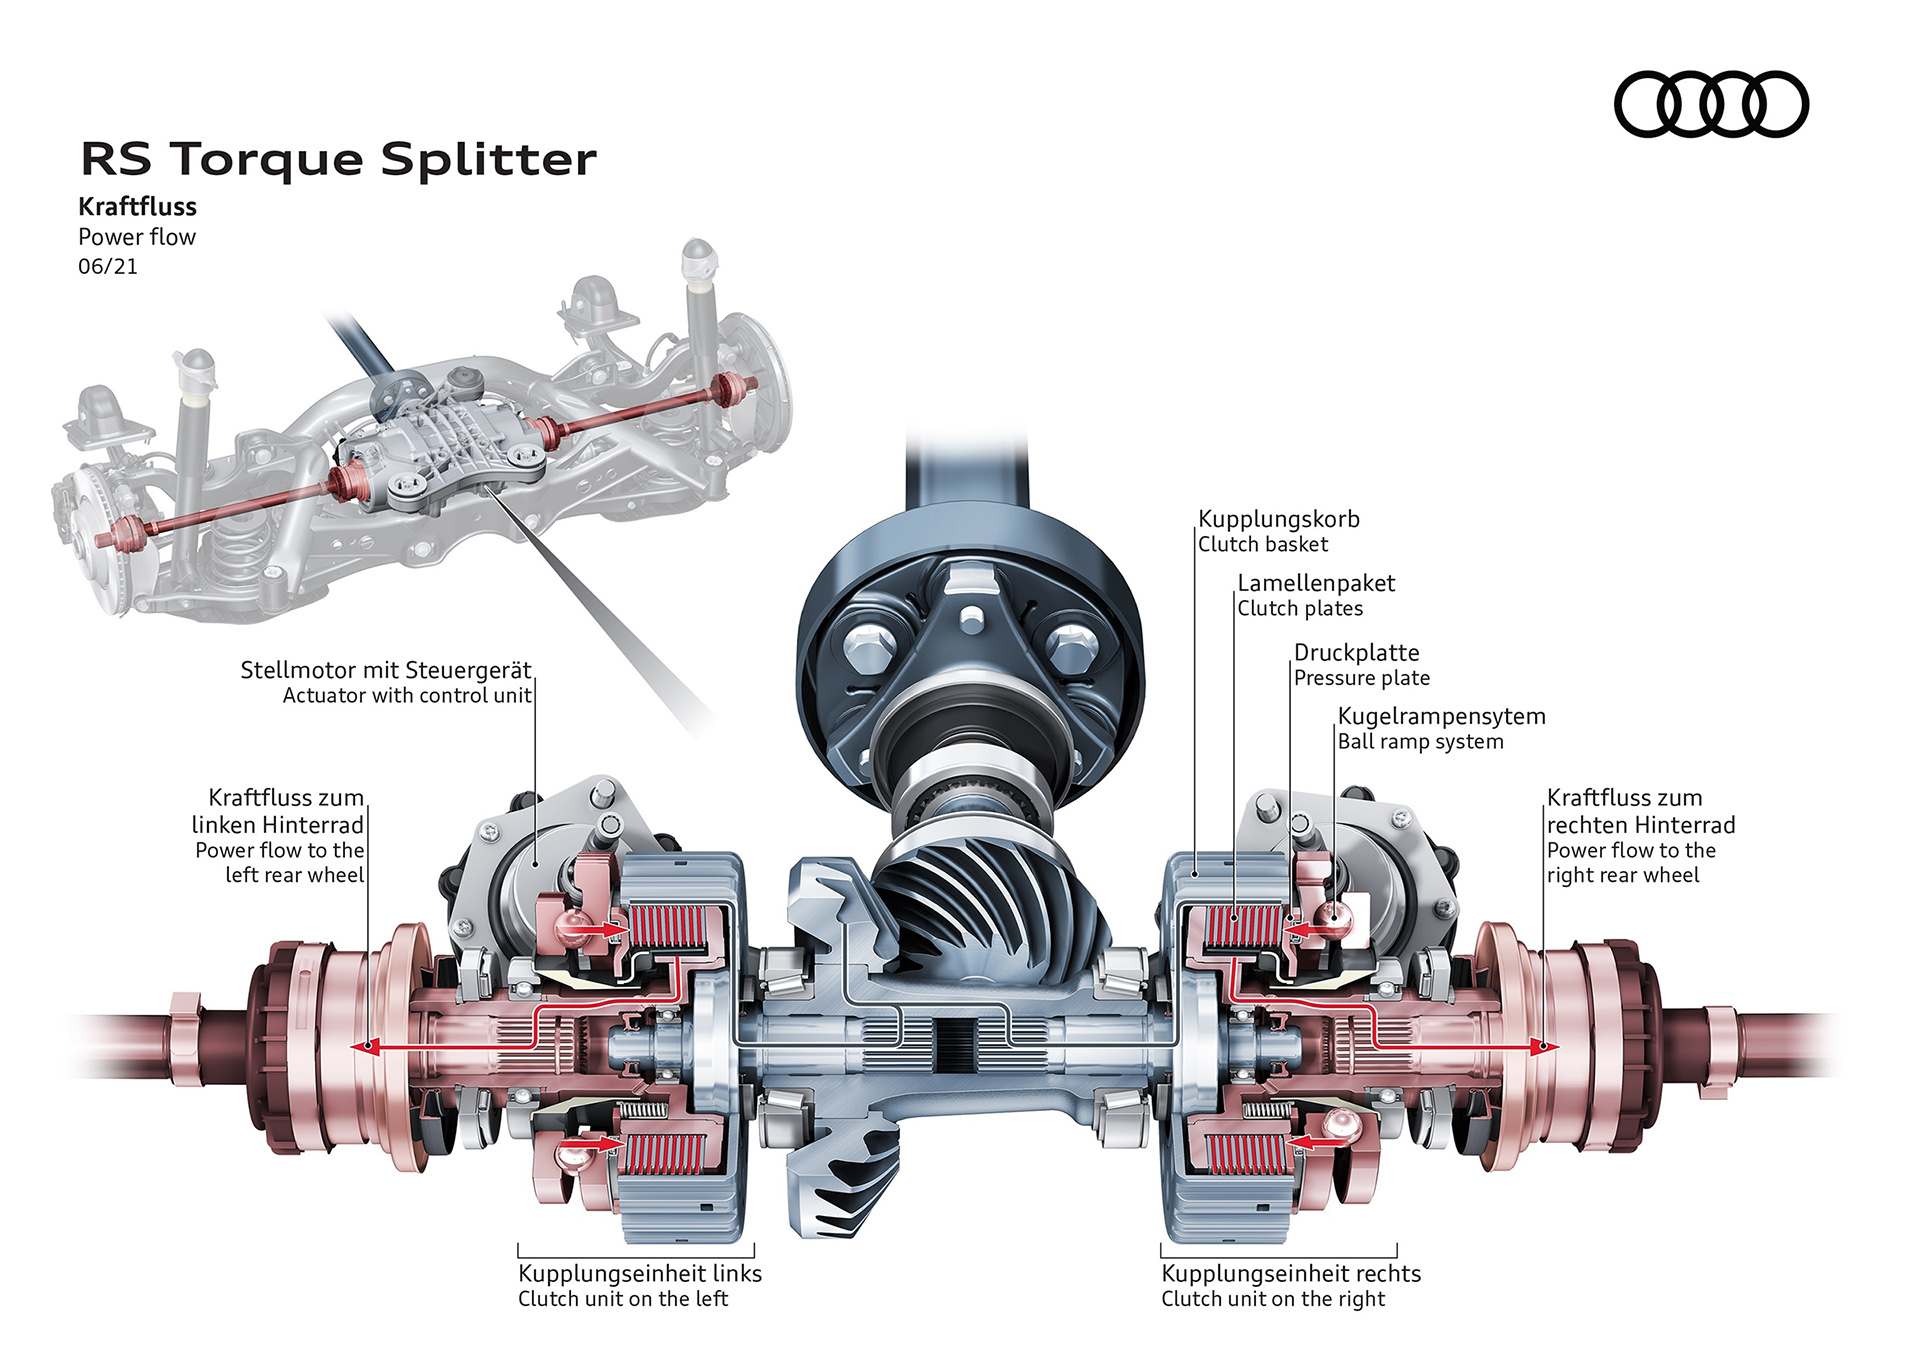 NEO AUDI RS 3 TORQUE SPLITTER 14 Πώς λειτουργεί το RS Torque Splitter του νέου Audi RS 3